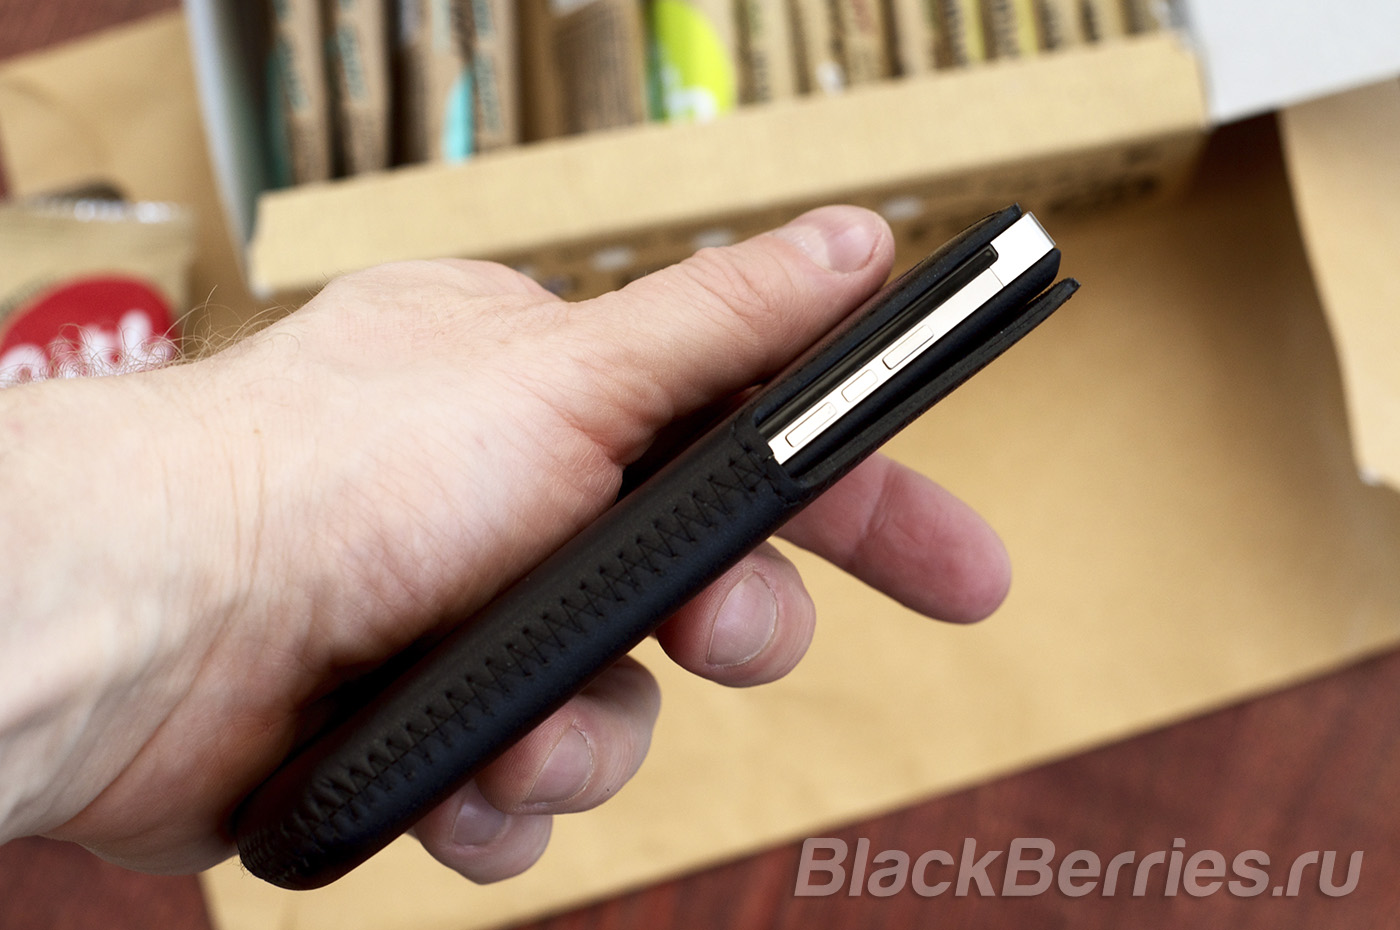 BlackBerry-P9982-Case-10